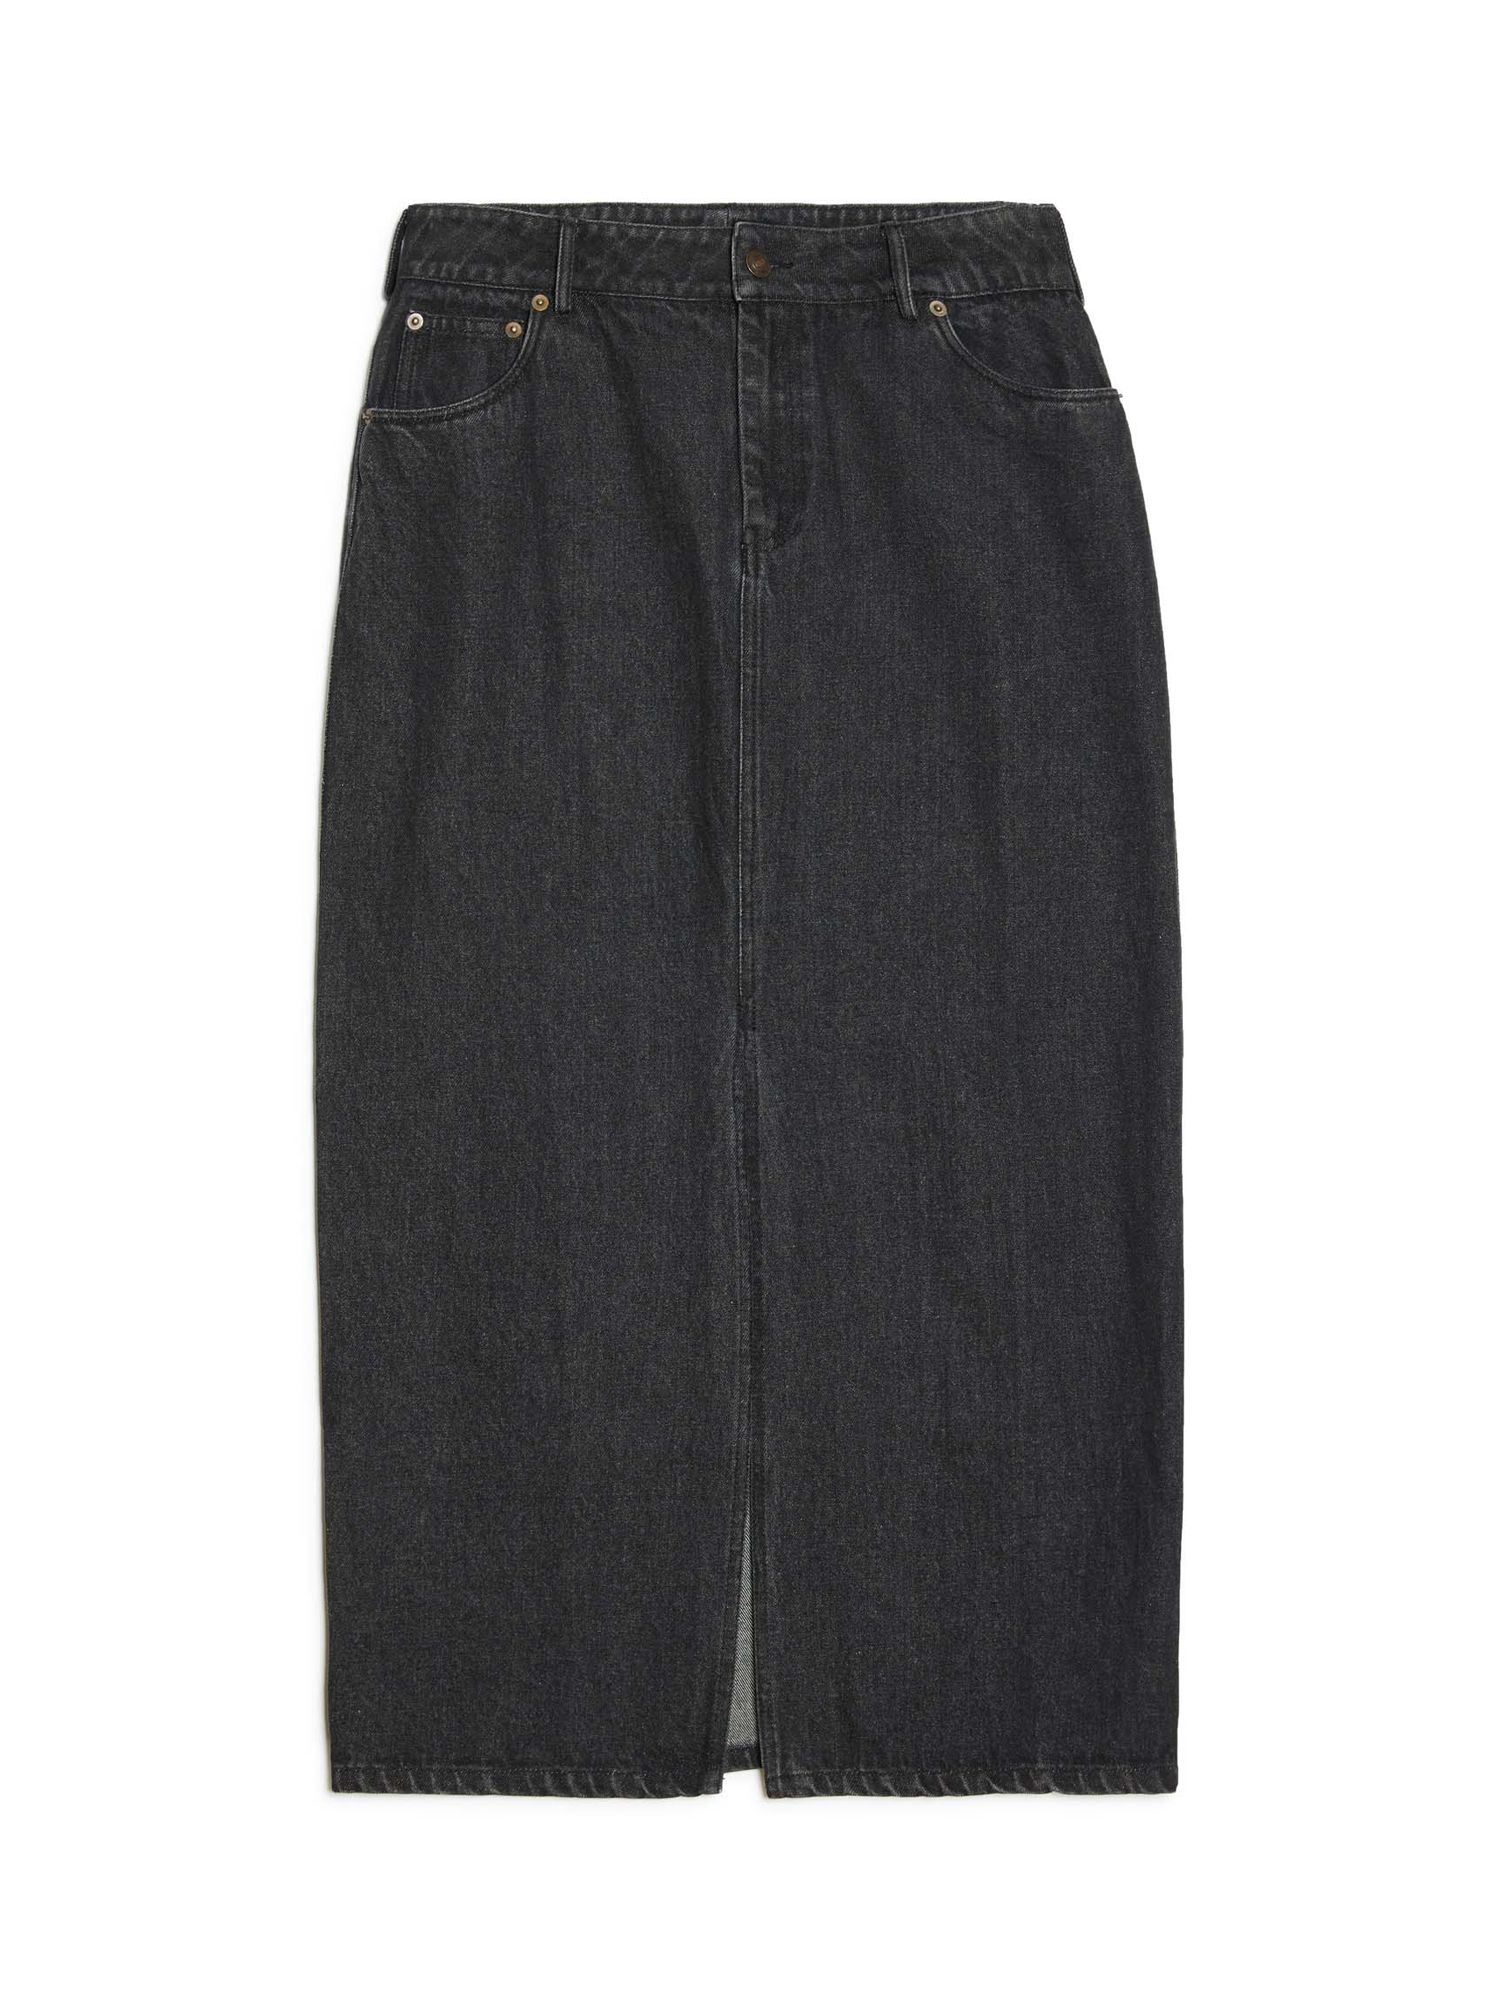 Albaray Cotton Denim Midi Skirt, Black at John Lewis & Partners